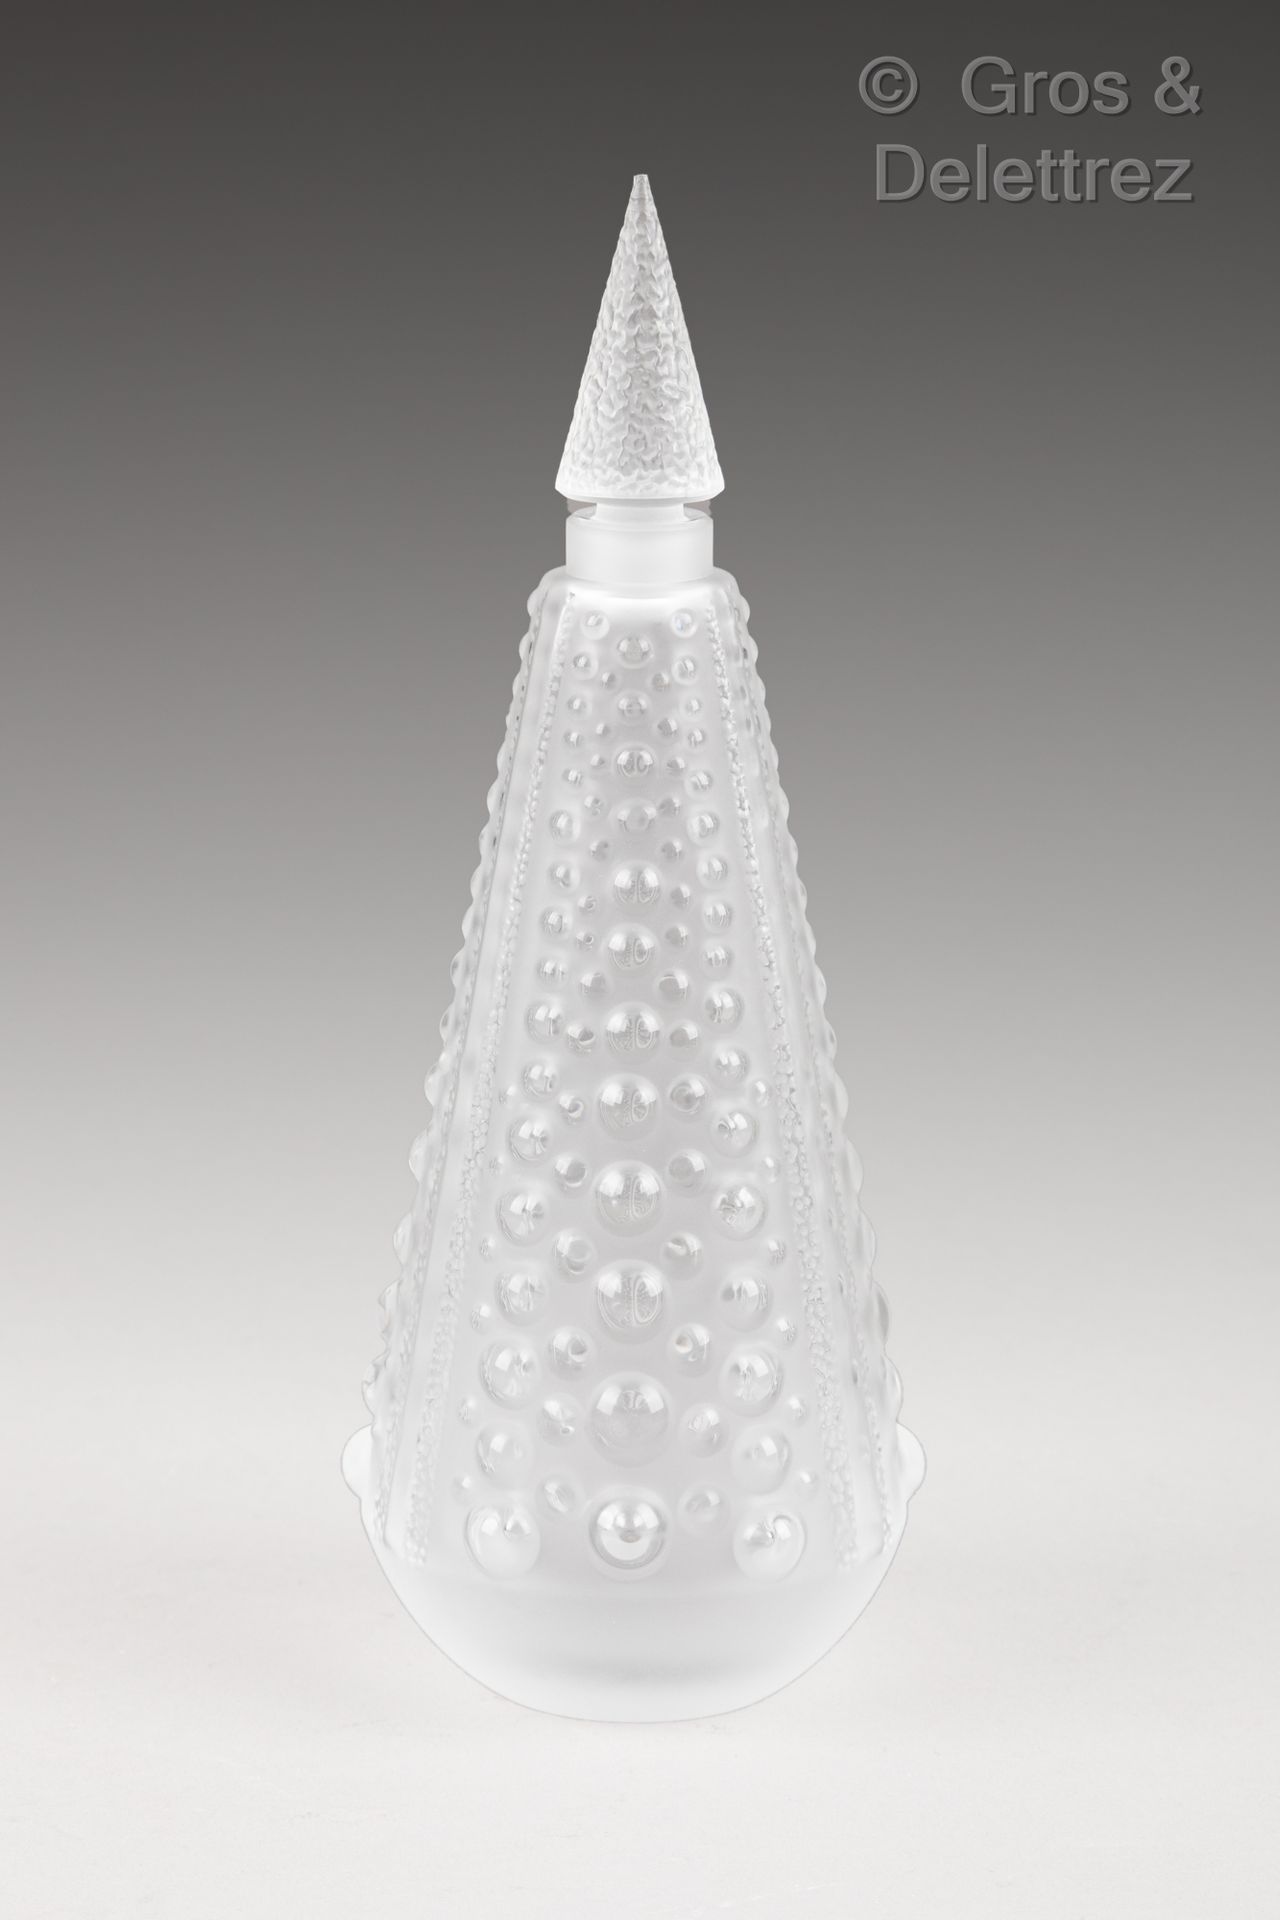 Null 法国莱俪公司。 瓶身为压制成型的玻璃，部分经过缎面处理，有四层的珍珠装饰。签名在顶端。高度：19.5厘米，顶端有小意外